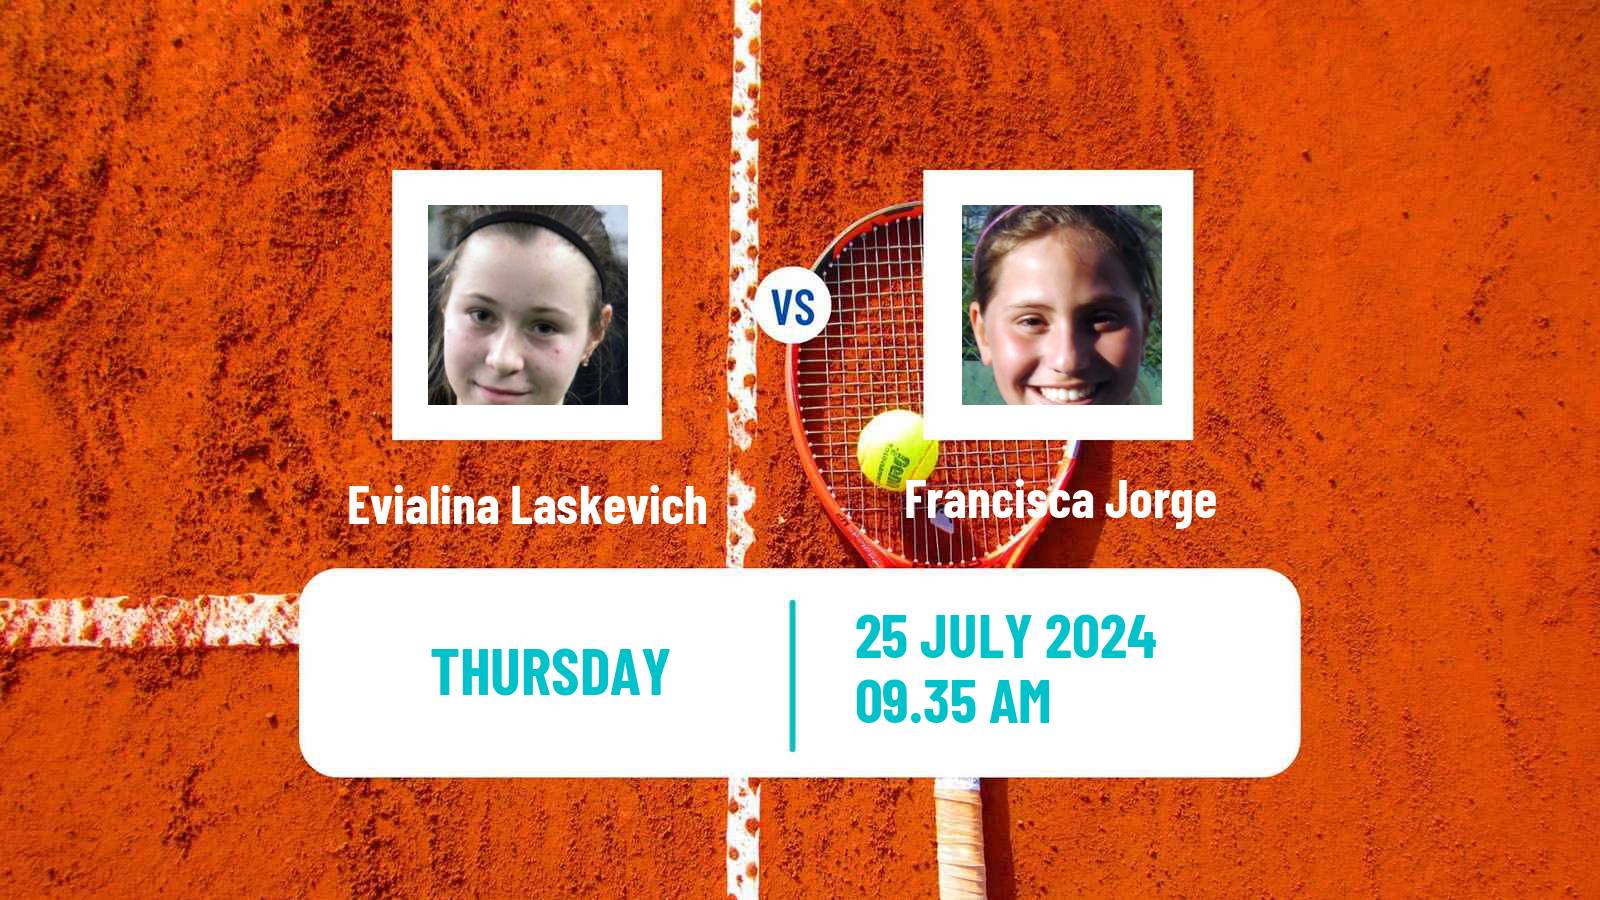 Tennis ITF W100 Figueira Da Foz Women Evialina Laskevich - Francisca Jorge